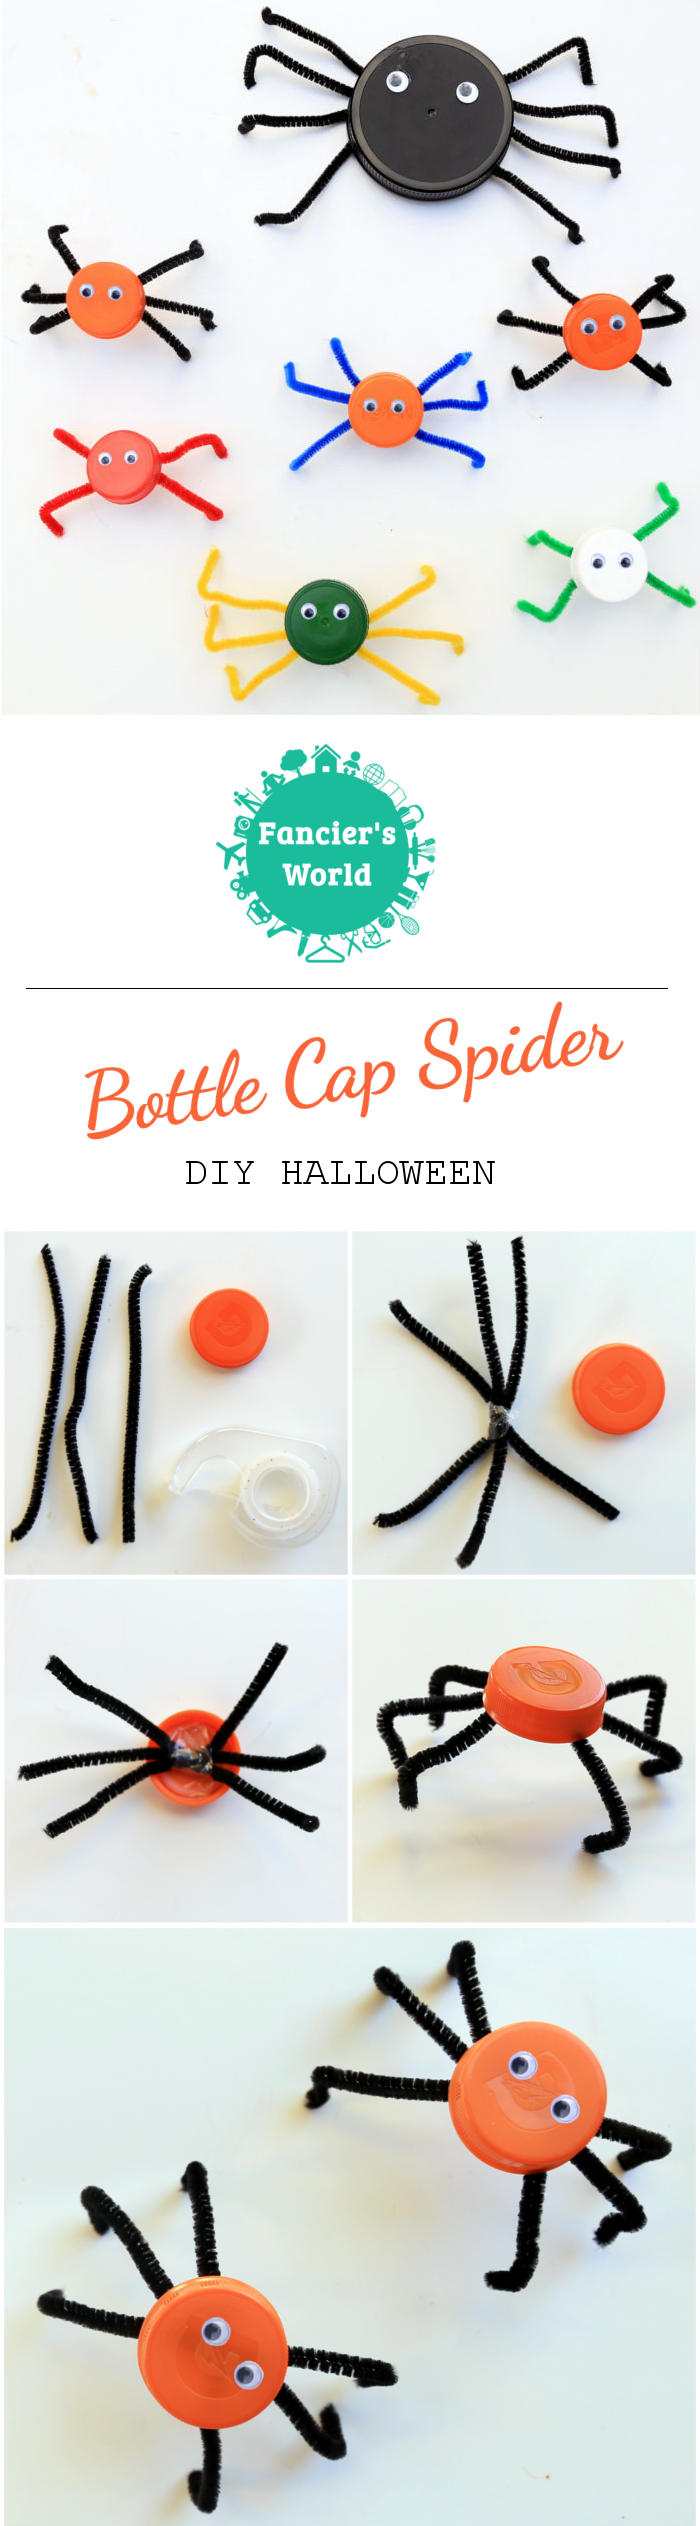 DIY Halloween - Steps for making Bottle Cap Spiders!